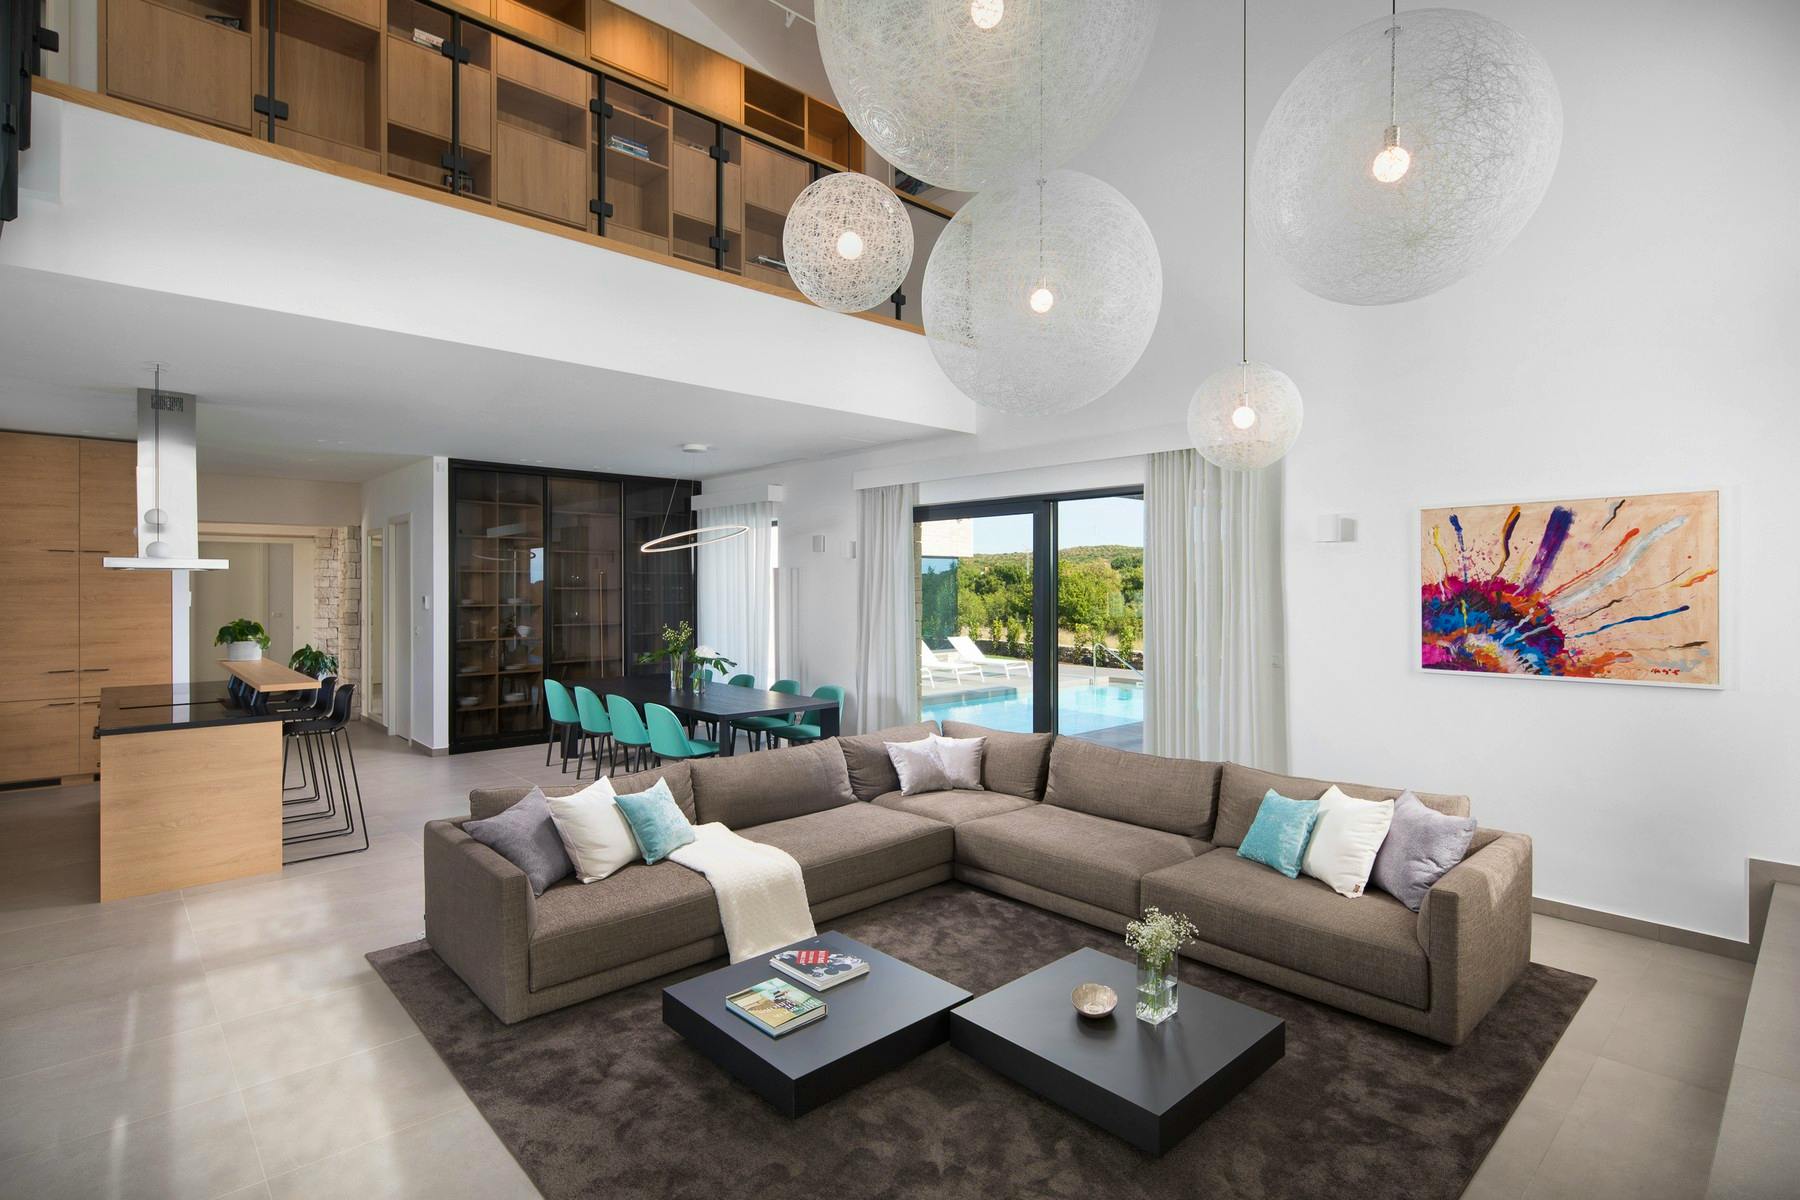 Open concept living area